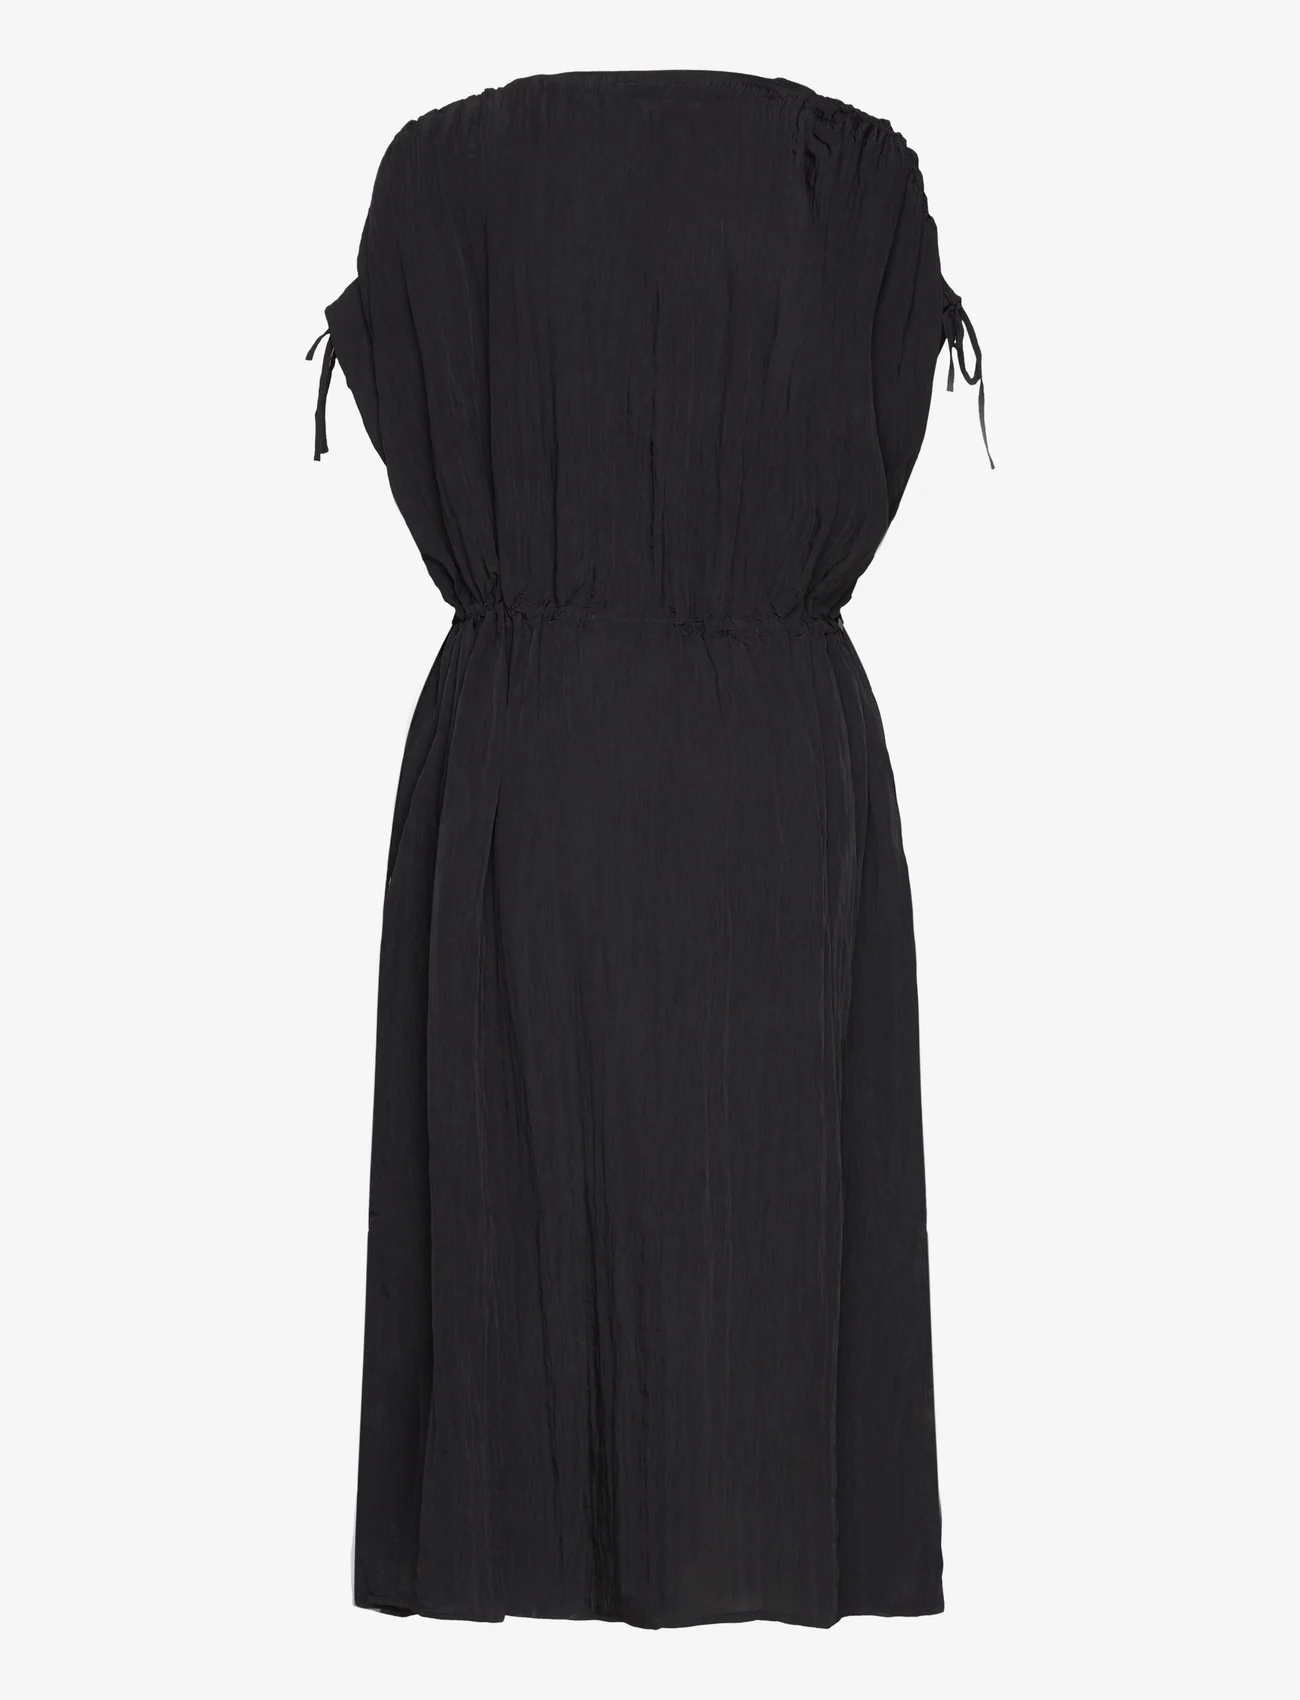 Lindex - Dress Lisa kaftan - sukienki letnie - black - 1